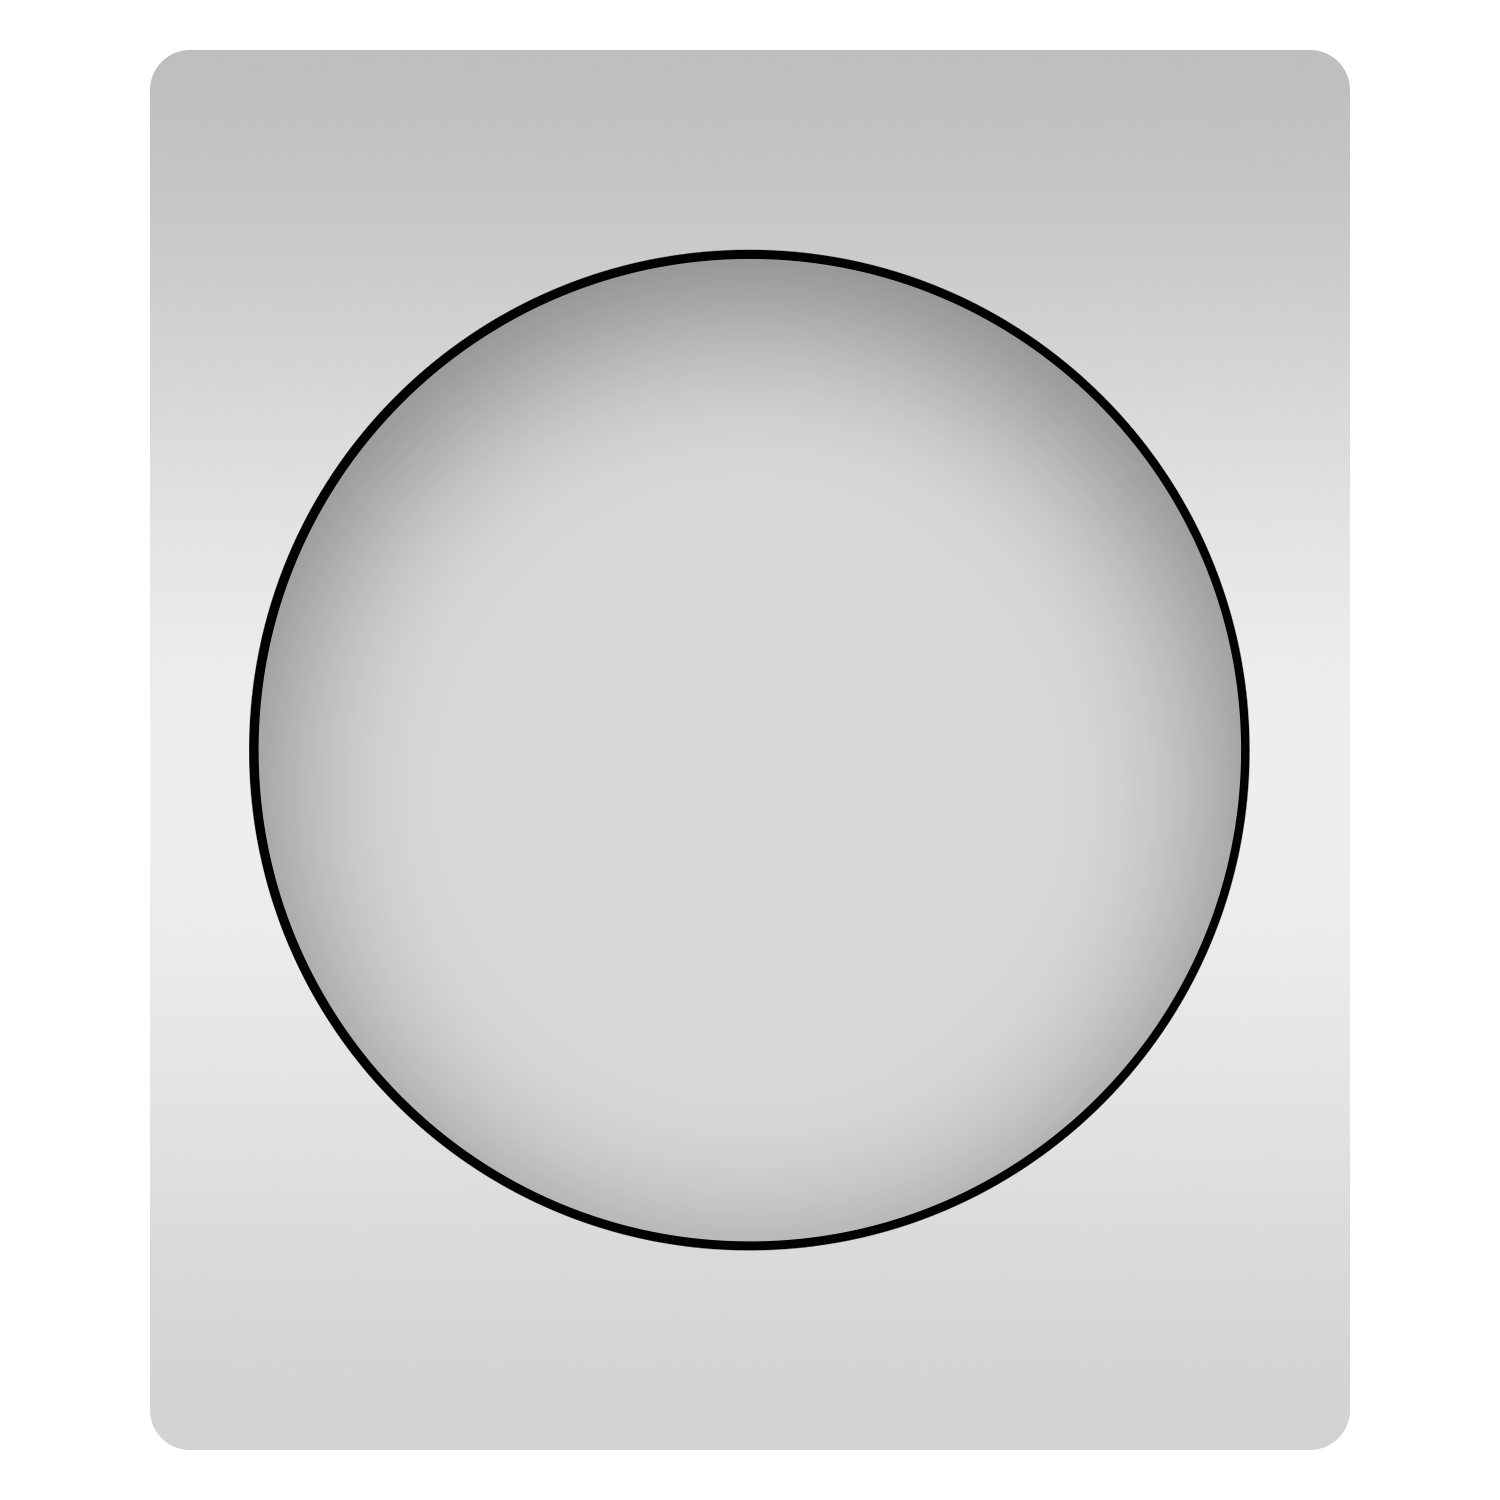 Влагостойкое круглое зеркало Wellsee 7 Rays' Spectrum 172200010, 50 см